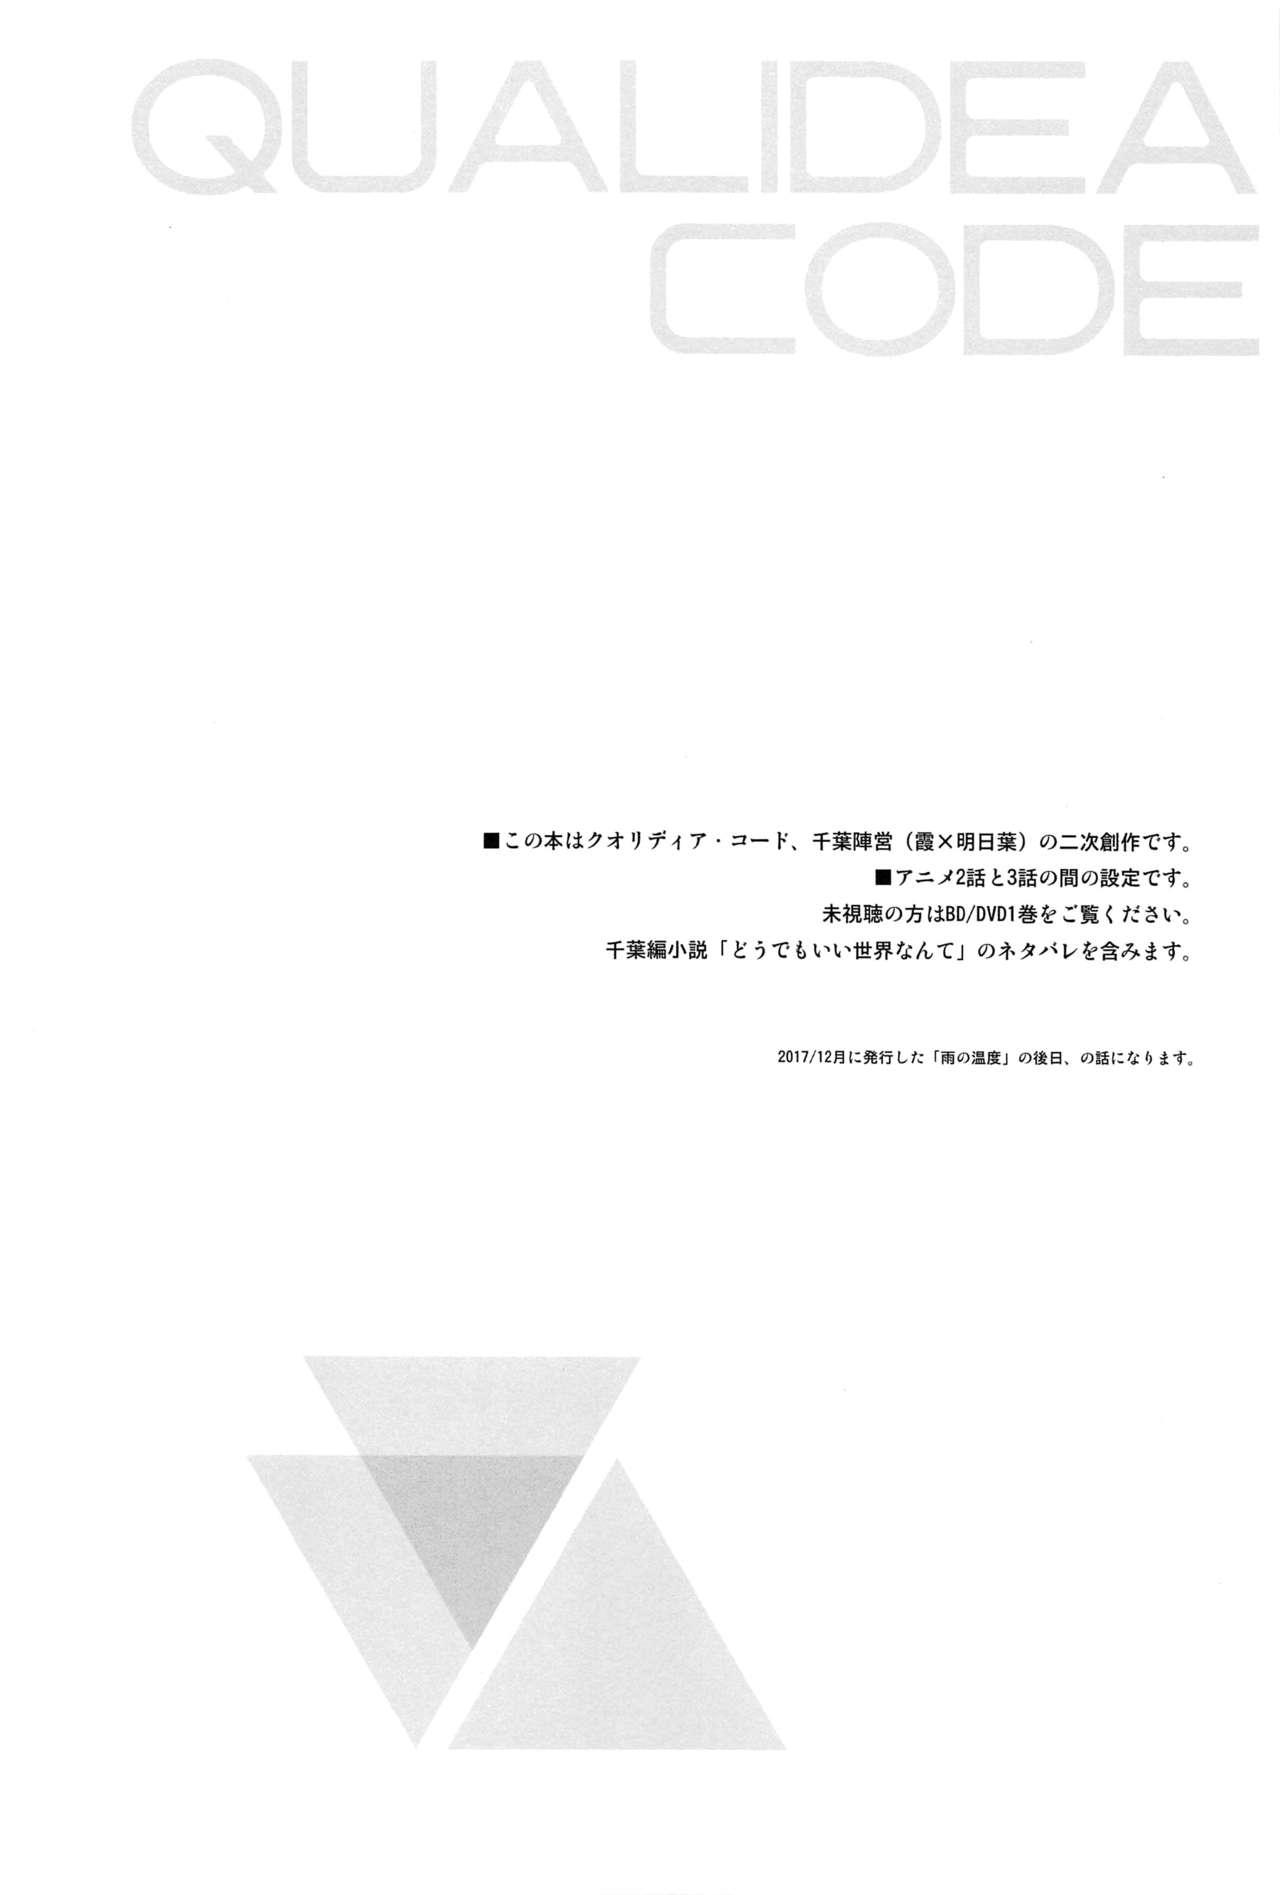 3some Kono Sekai no Owari made - Qualidea code Defloration - Page 4